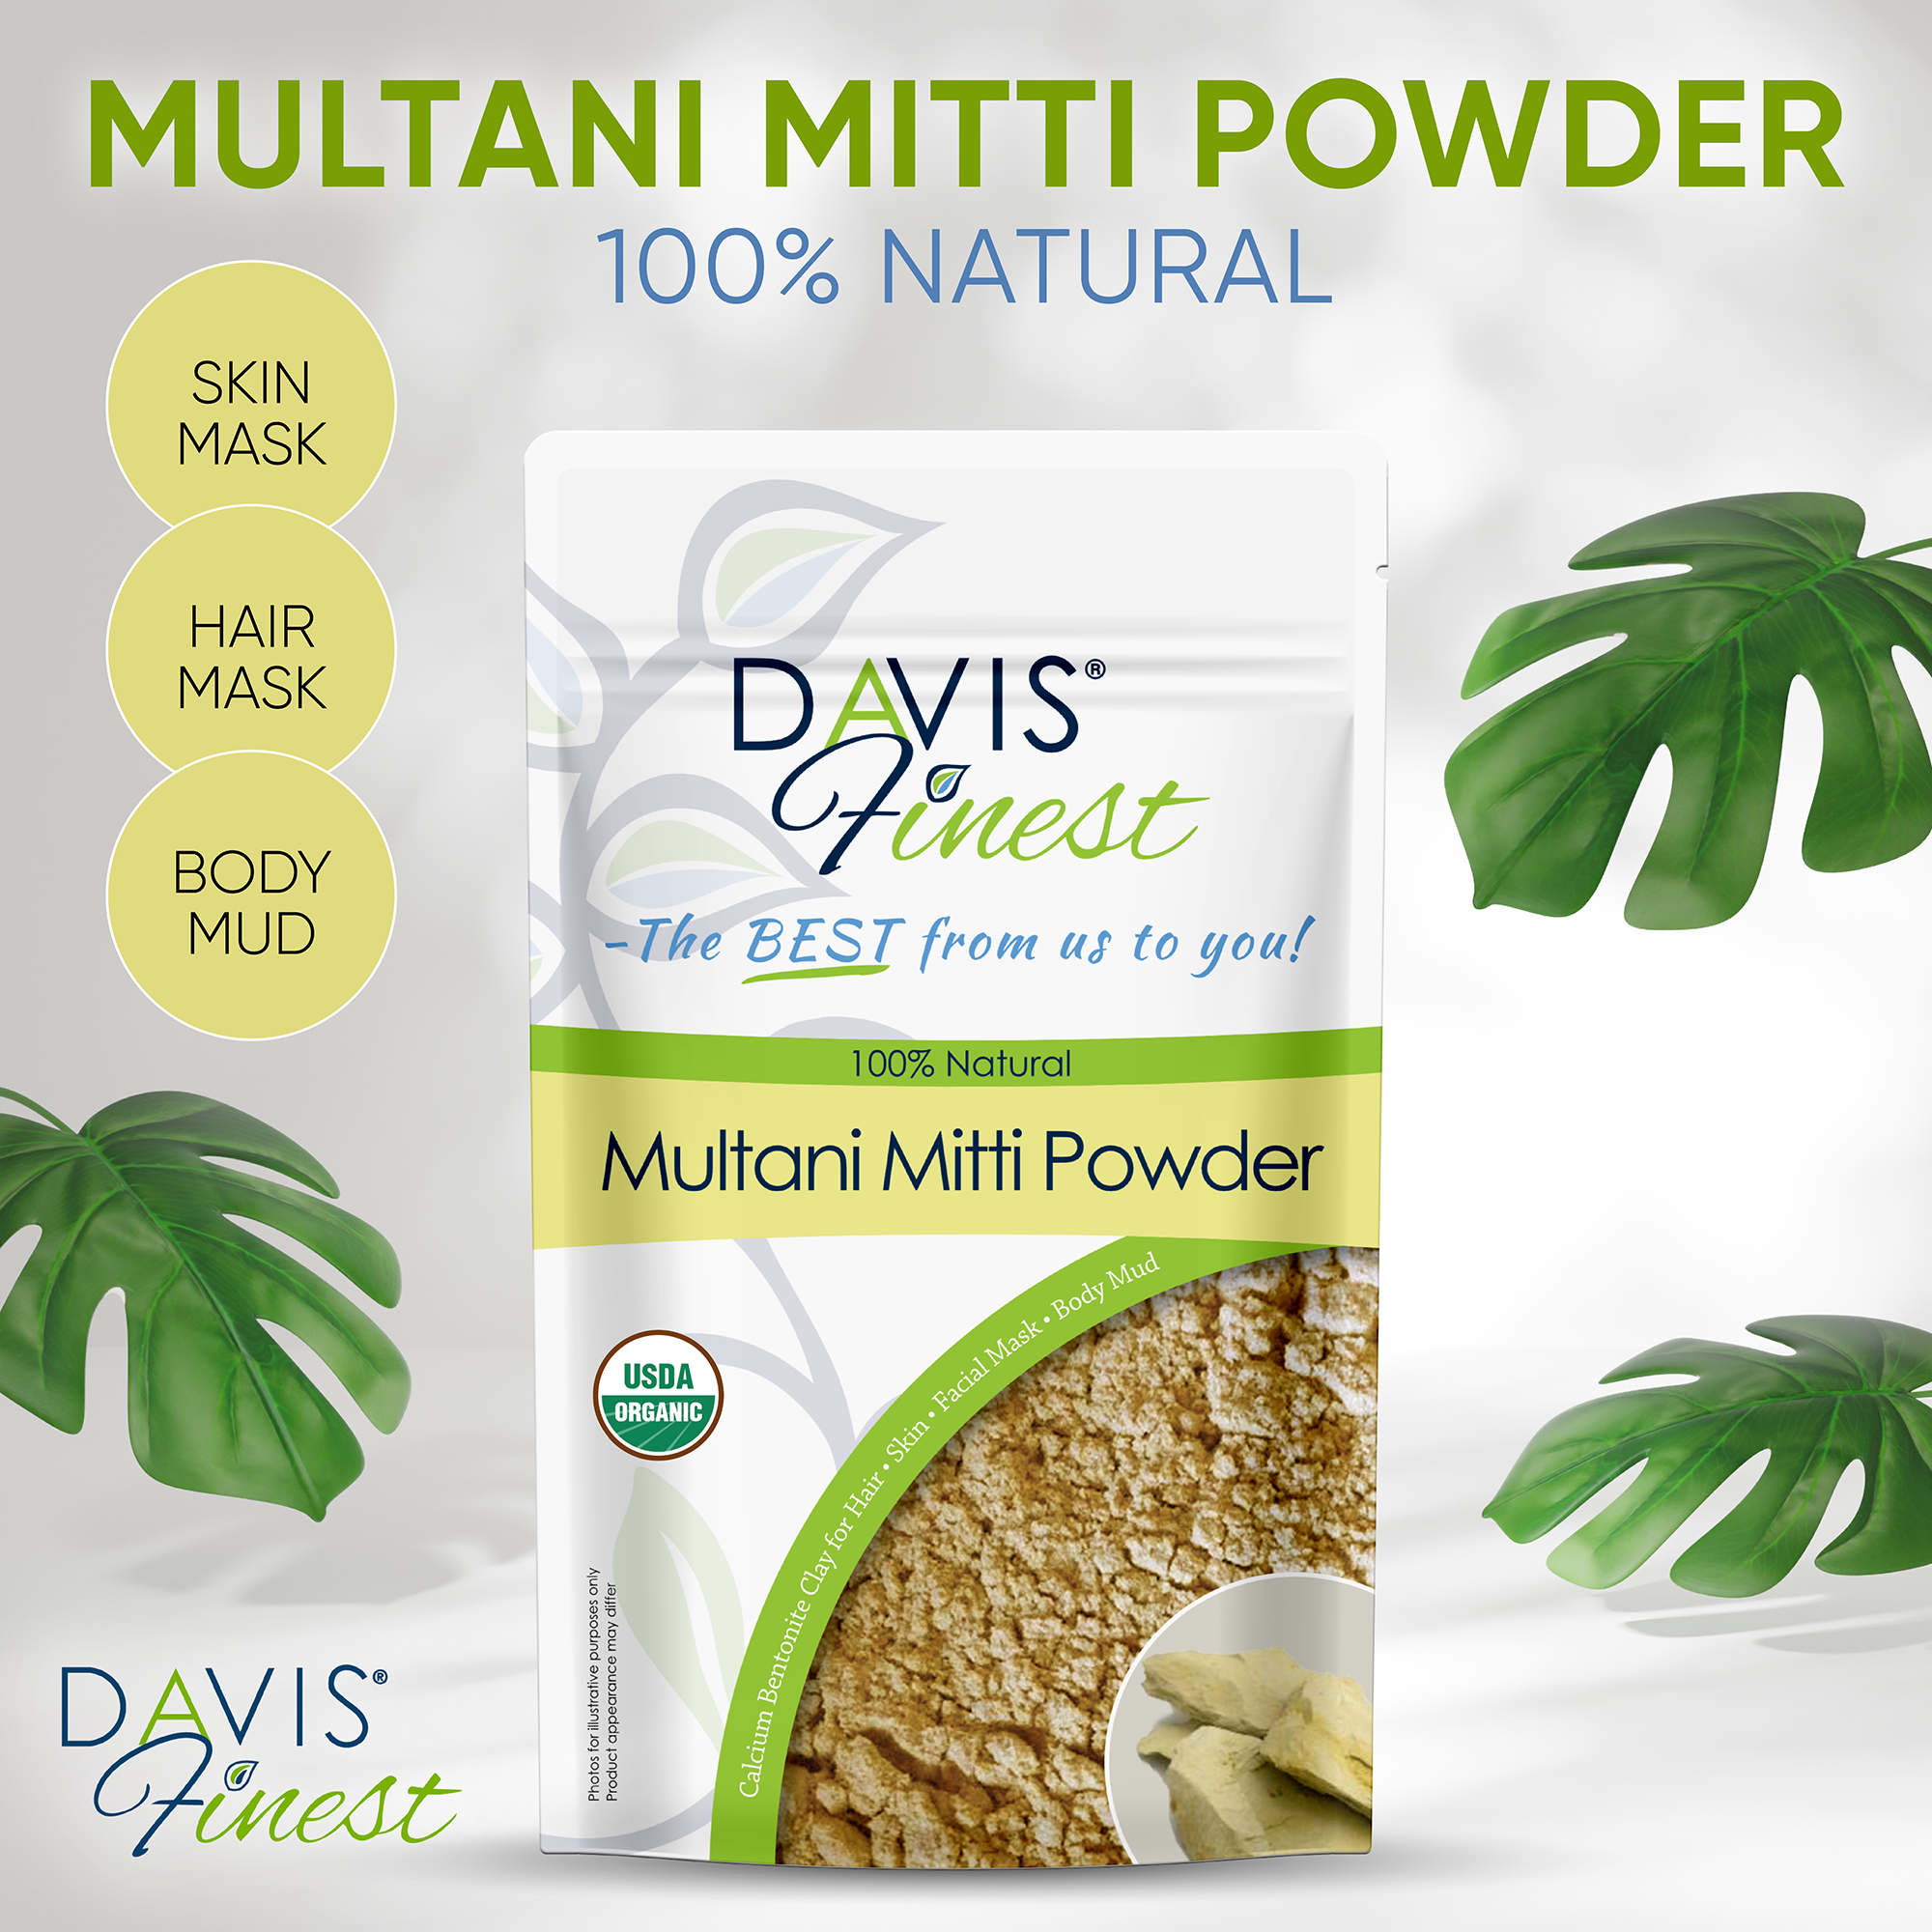 Multani Mitti Powder (Indian Healing Clay)